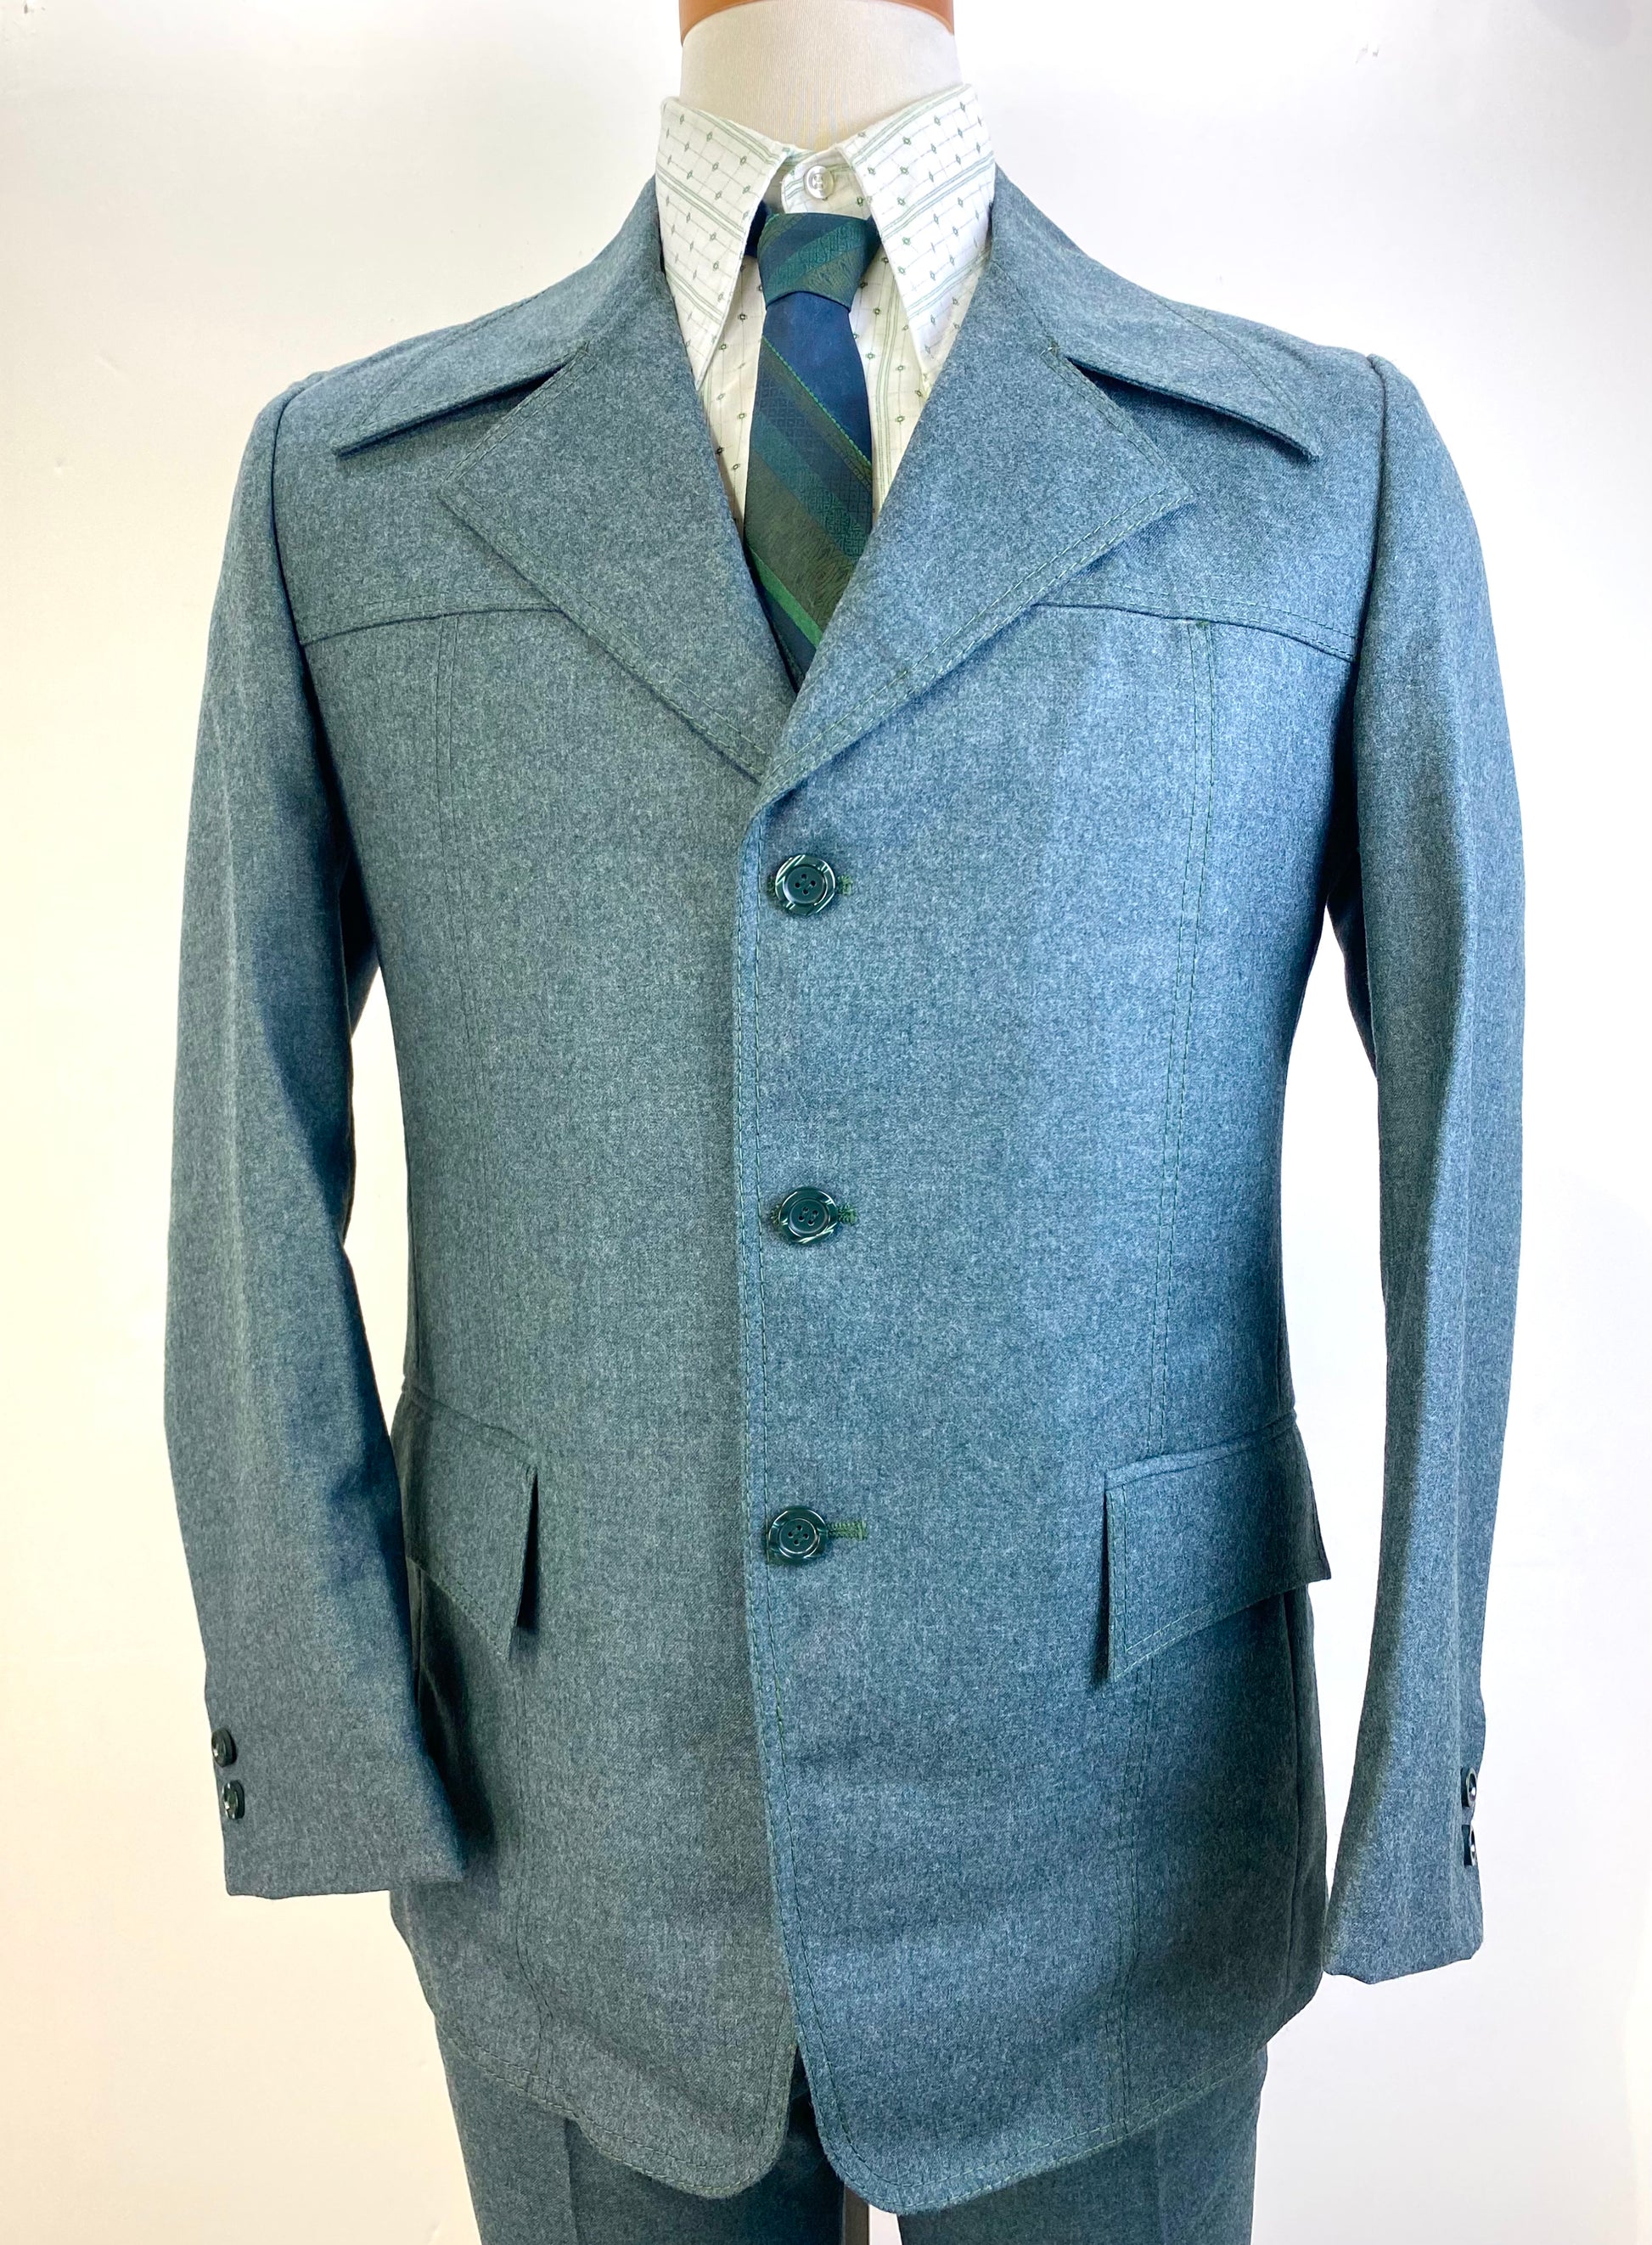 1970s Vintage Deadstock Men's Suit, Green Wool 3-Piece Suit, Kent Tailoring, NOS